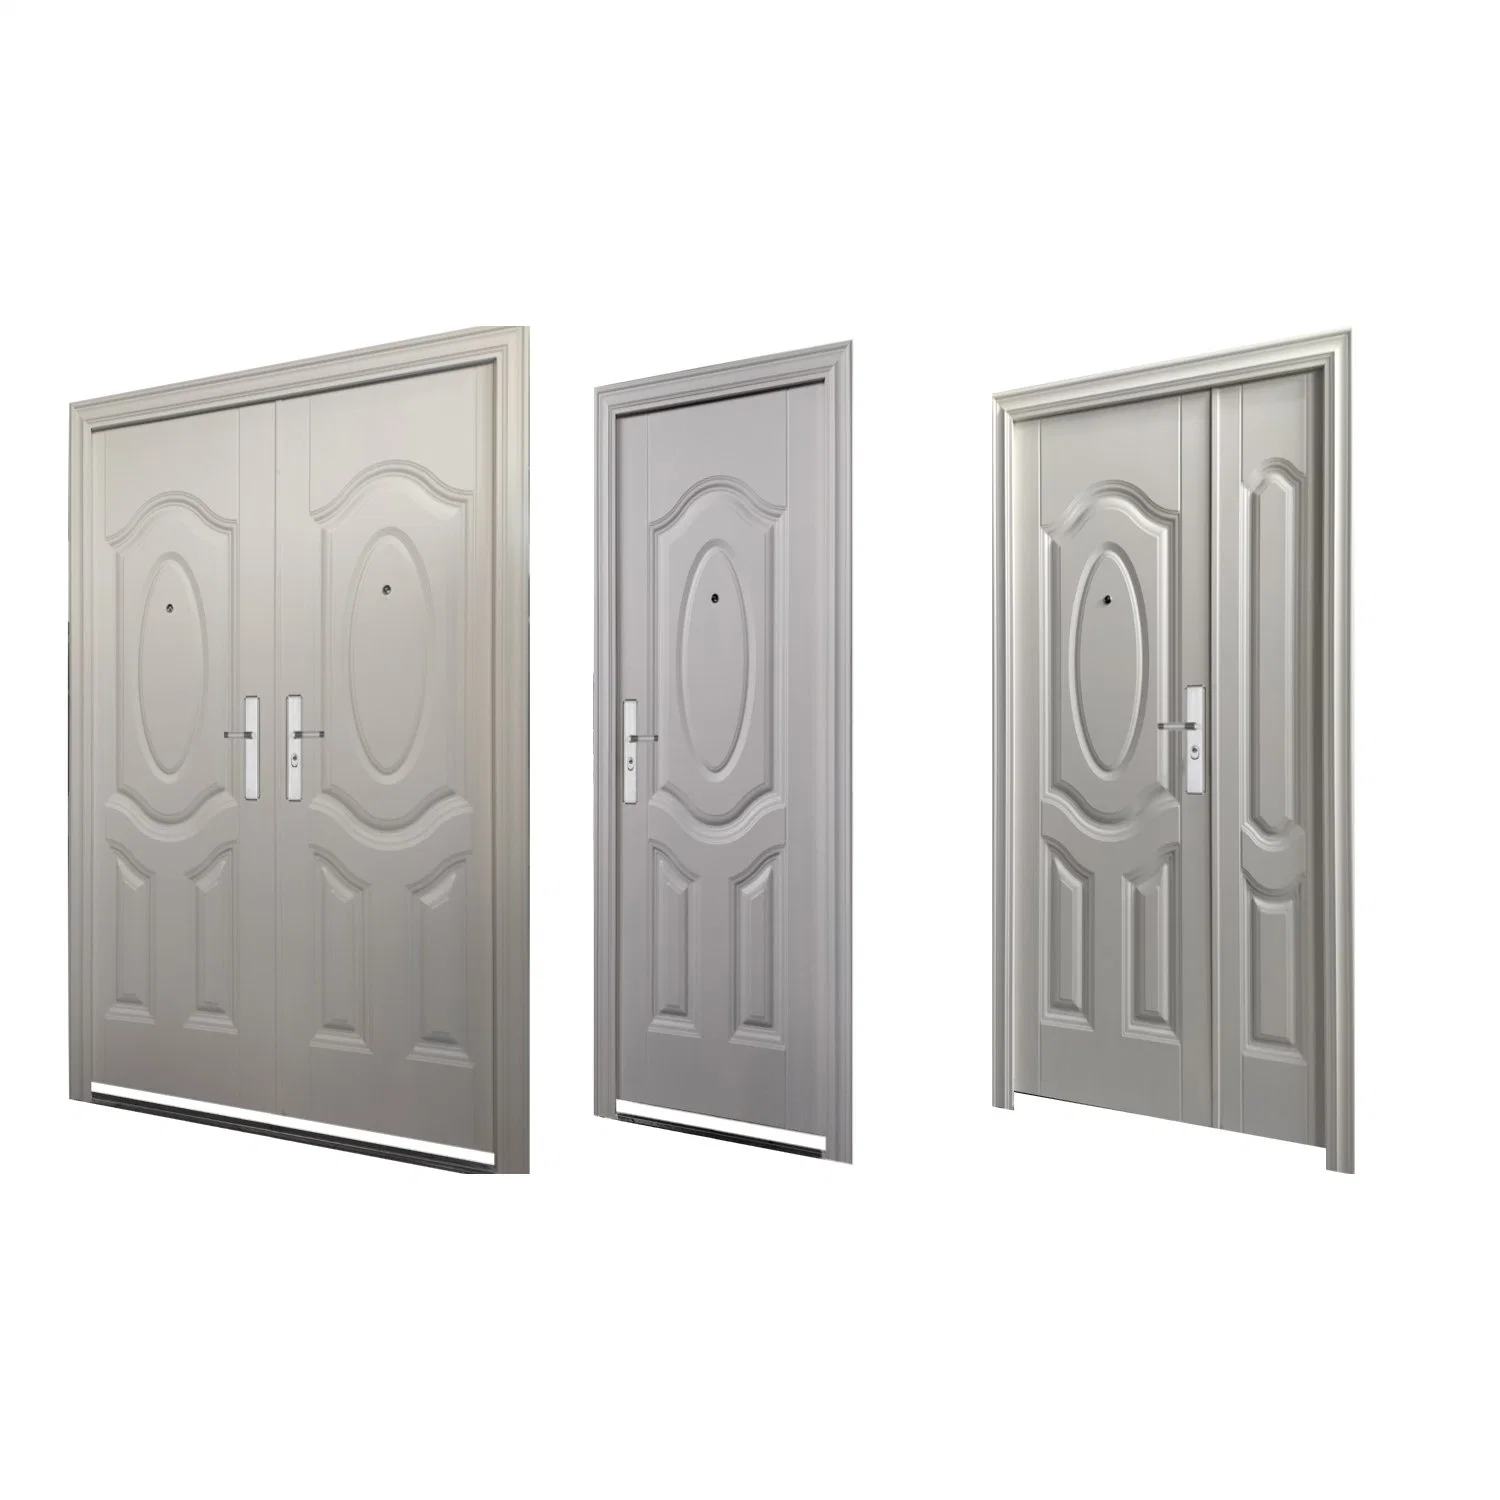 Modern Popular Wooden Doors, White Primer Coating Cheap Quality MDF HDF Wooden Interior Doors